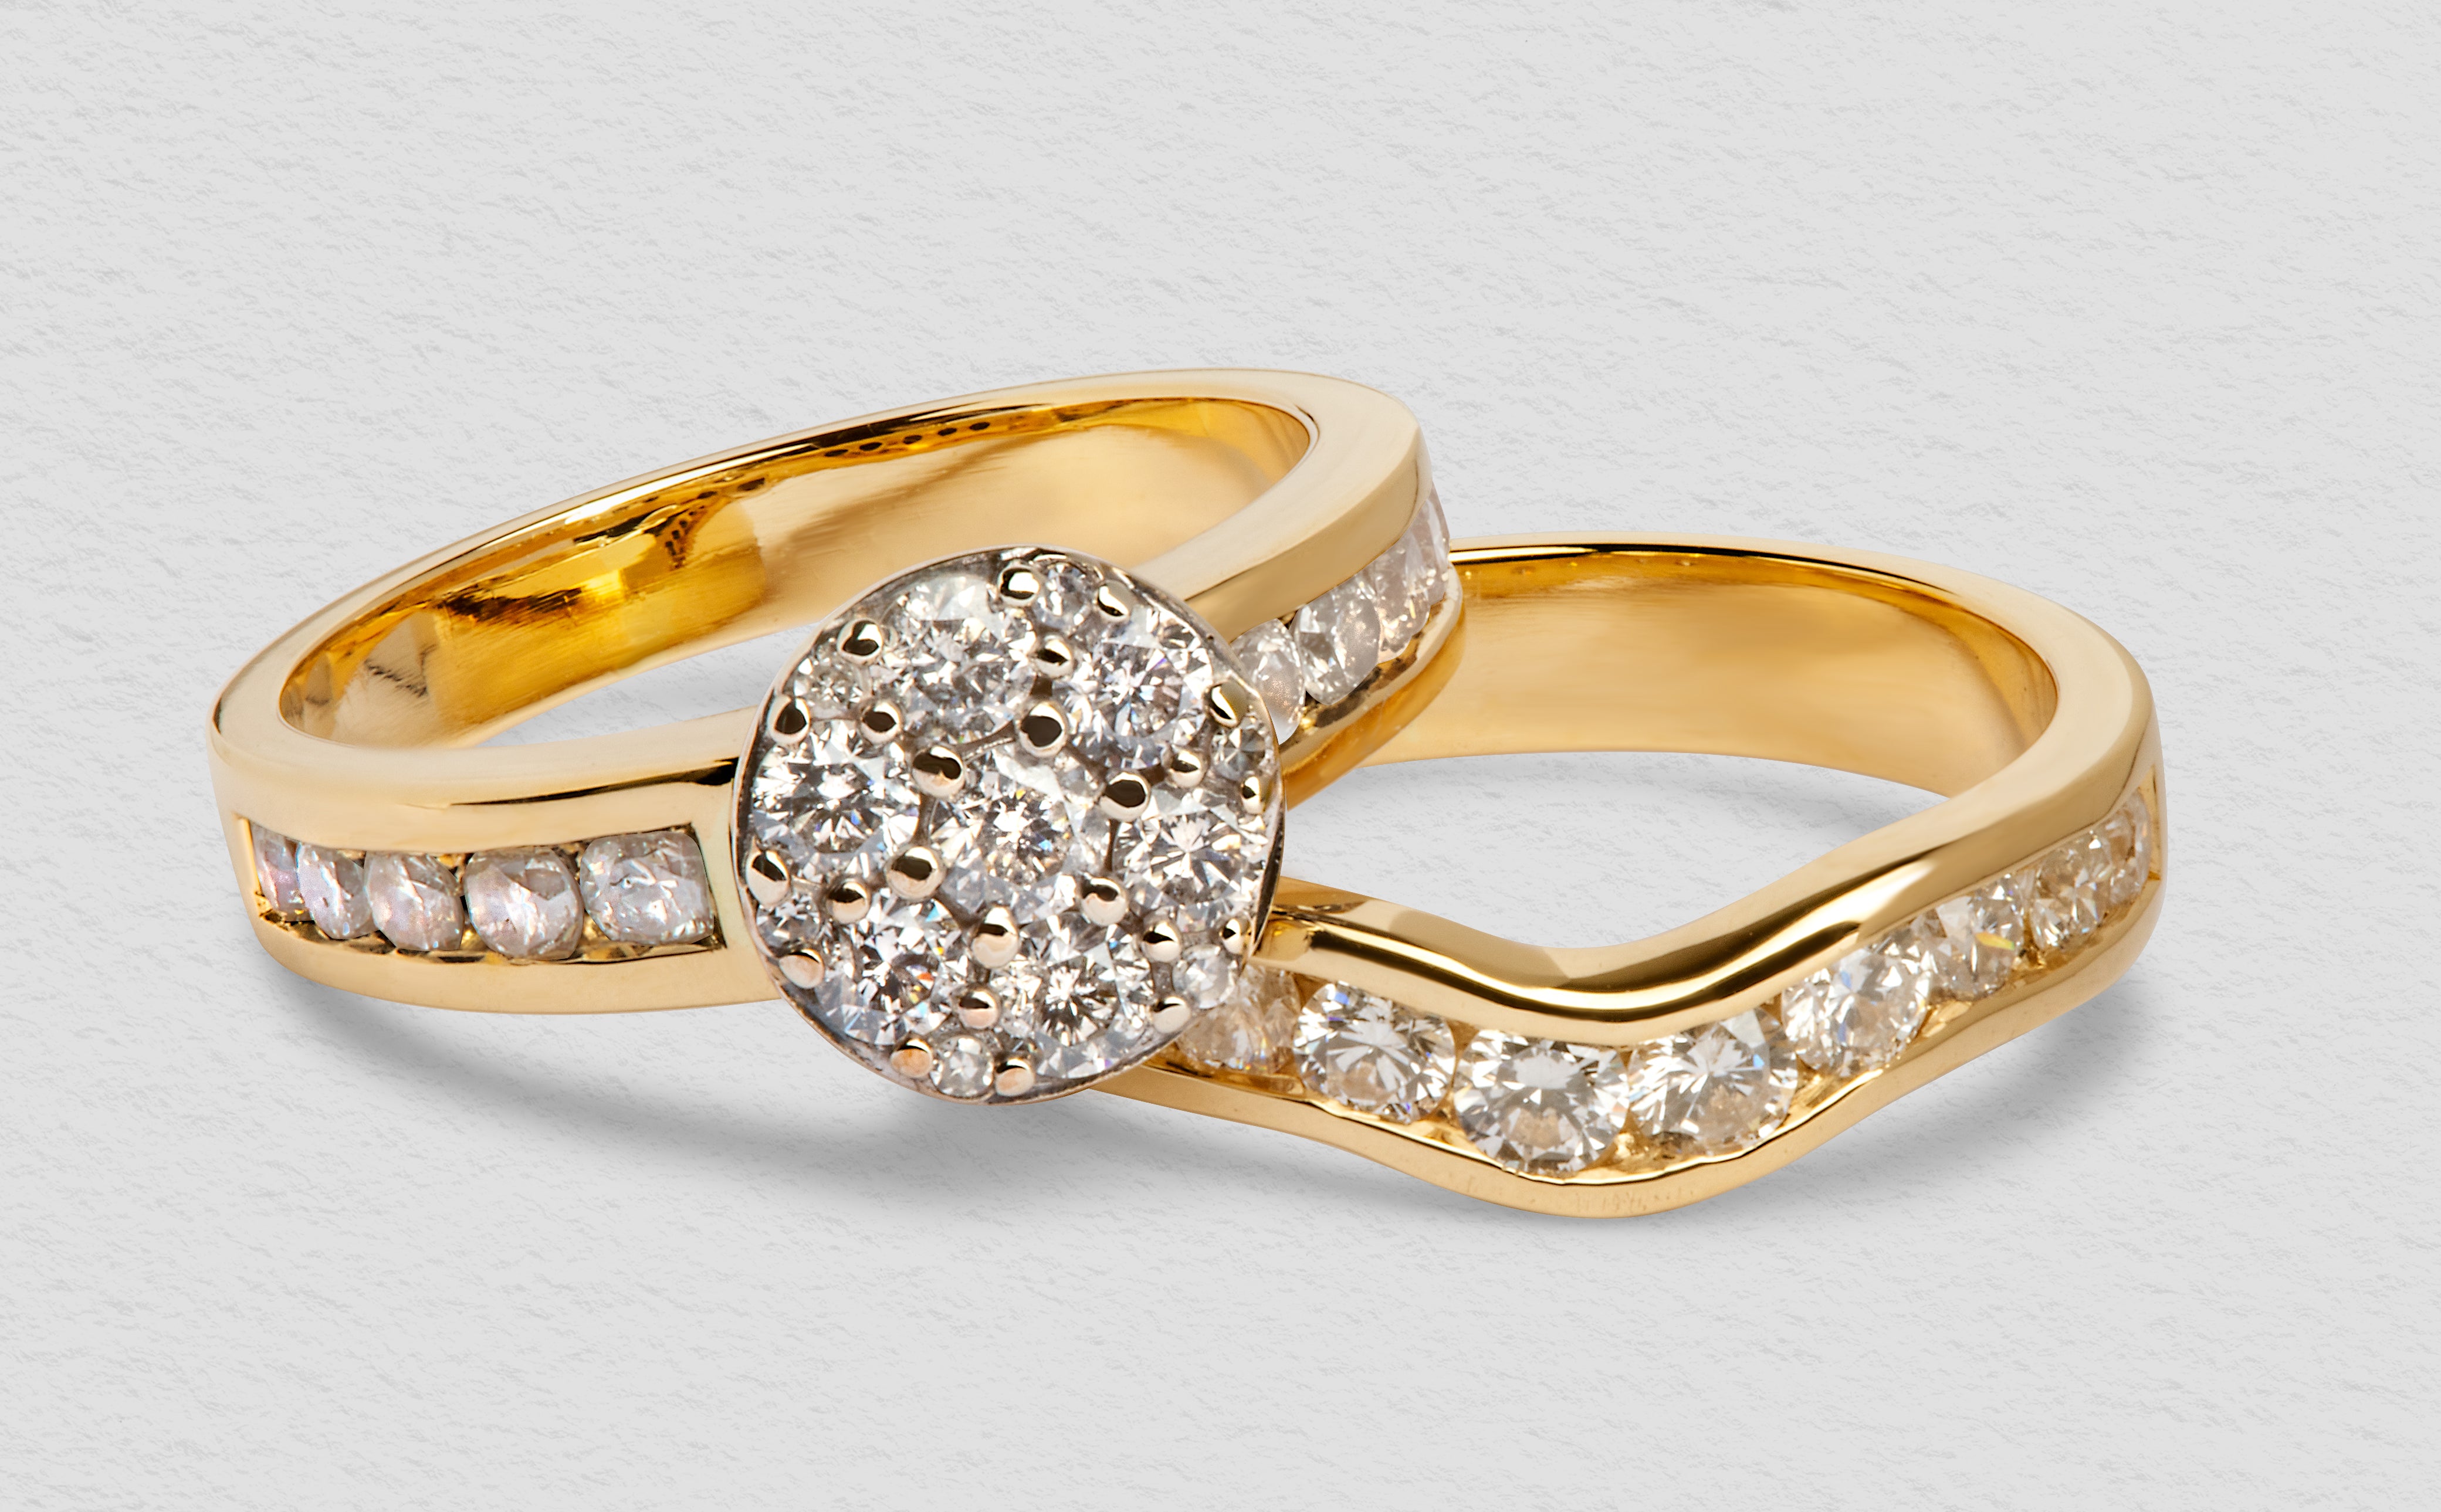 Fashion Luxury Adjustable Diamond Engagement Proposal Ring